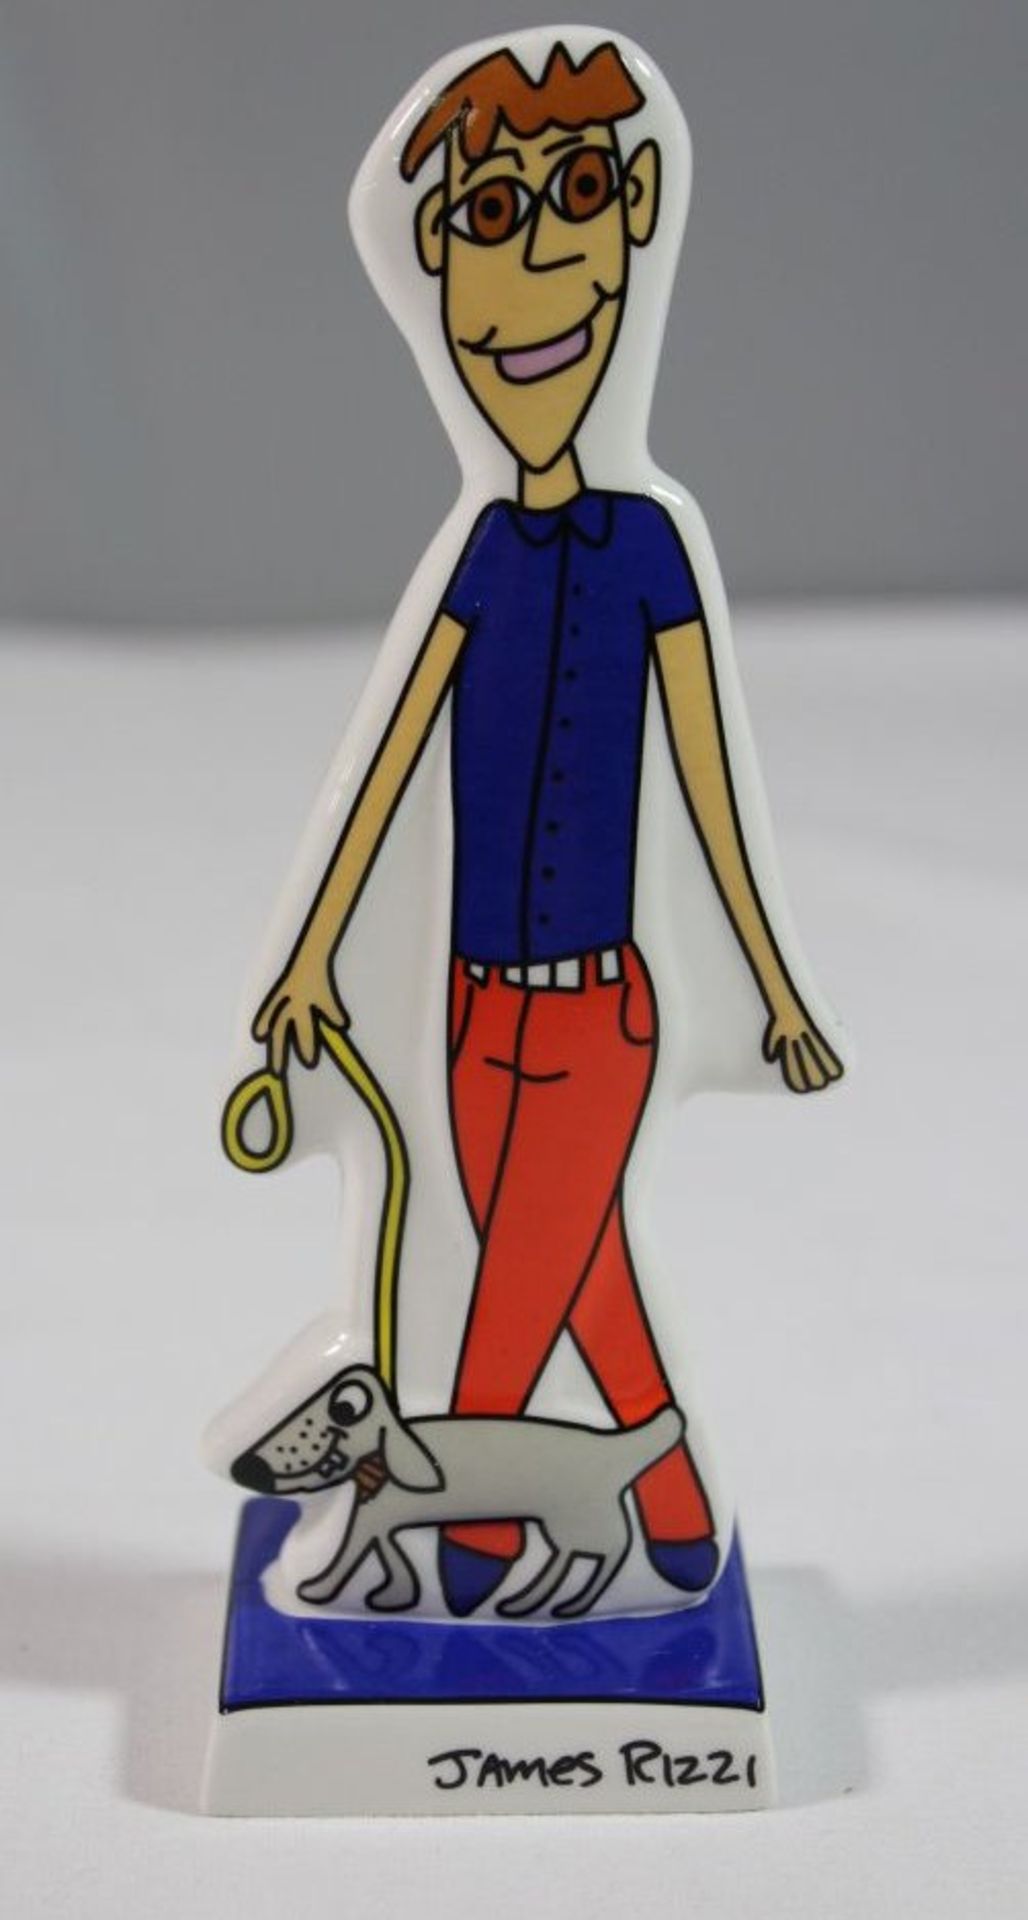 Goebel-Figur "Walk the Dog", Artis-Orbis, Entw. James Rizzi, orig. Karton, ca. H-13,5cm. - Bild 2 aus 4